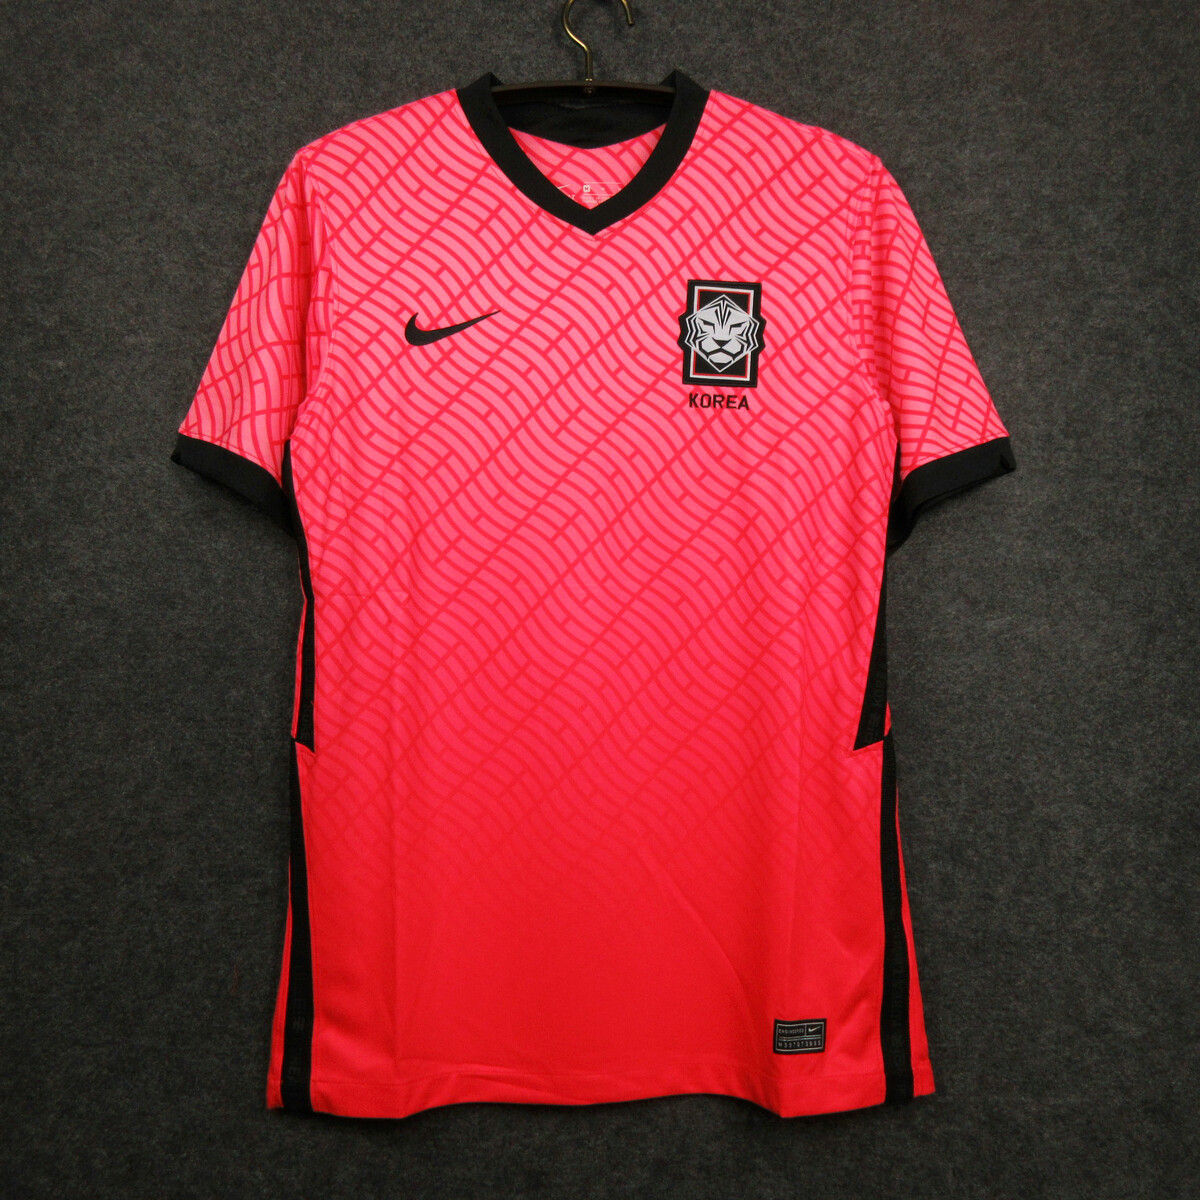 Camisa Nike Coreia I 2020/21 Torcedor Pro Masculina